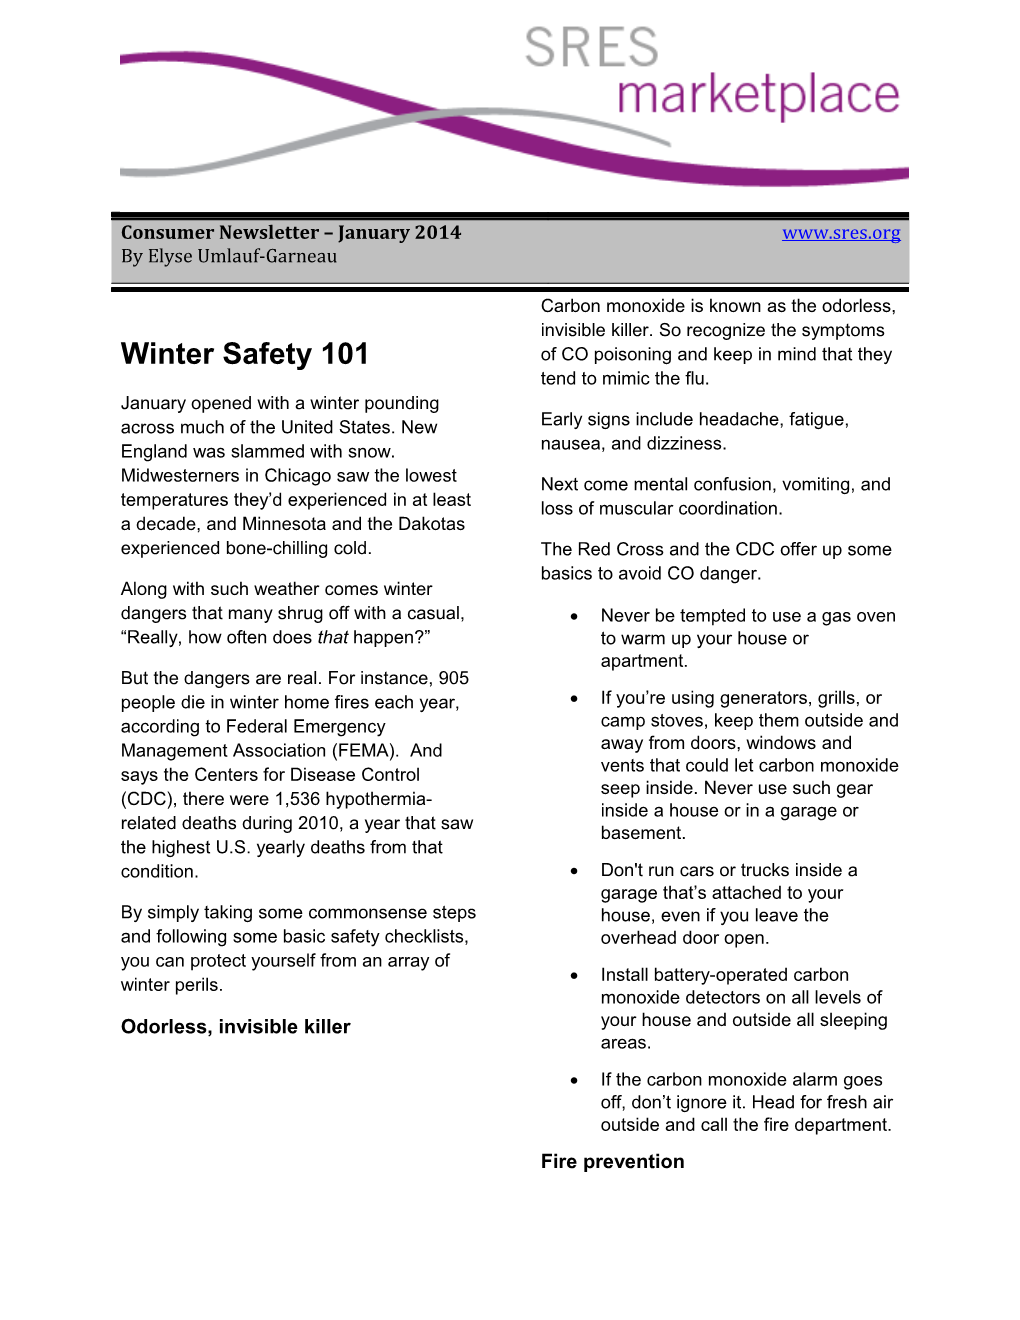 Winter Safety 101